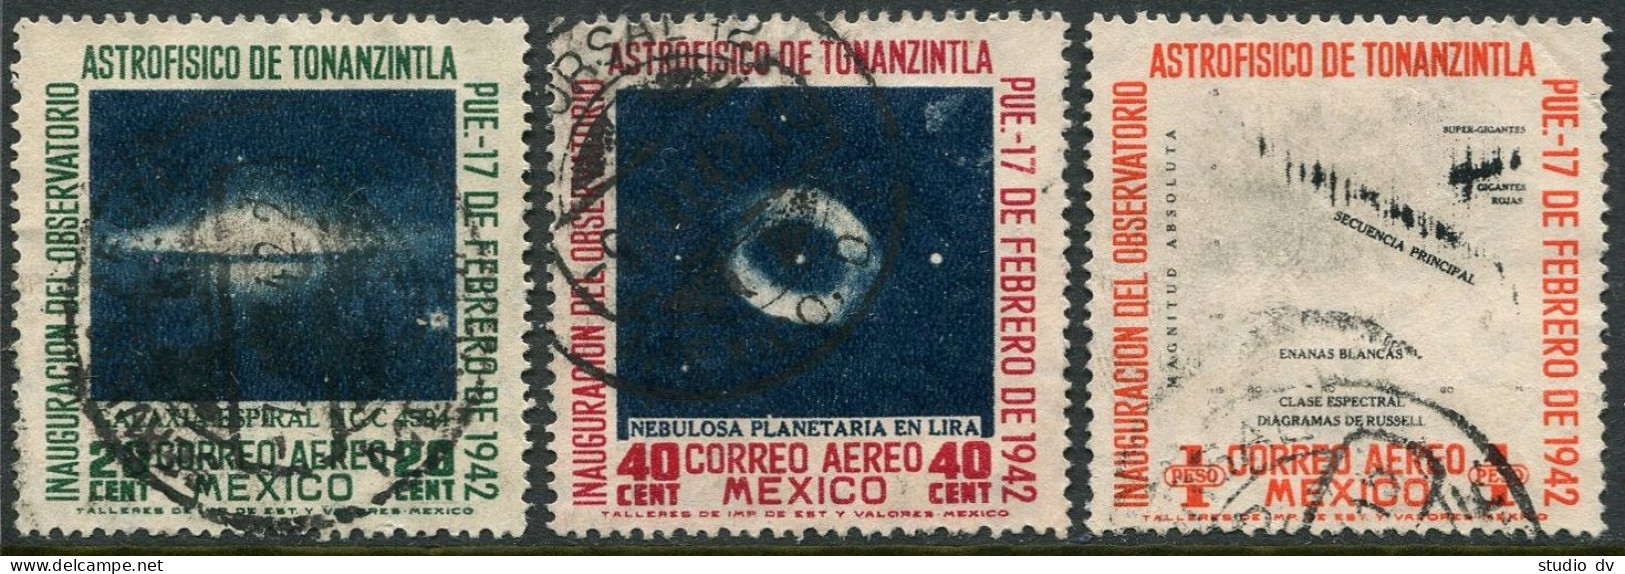 Mexico C123-C126, Used. Michel 813-815. Air Post 1942. Astrophysics. - Mexique